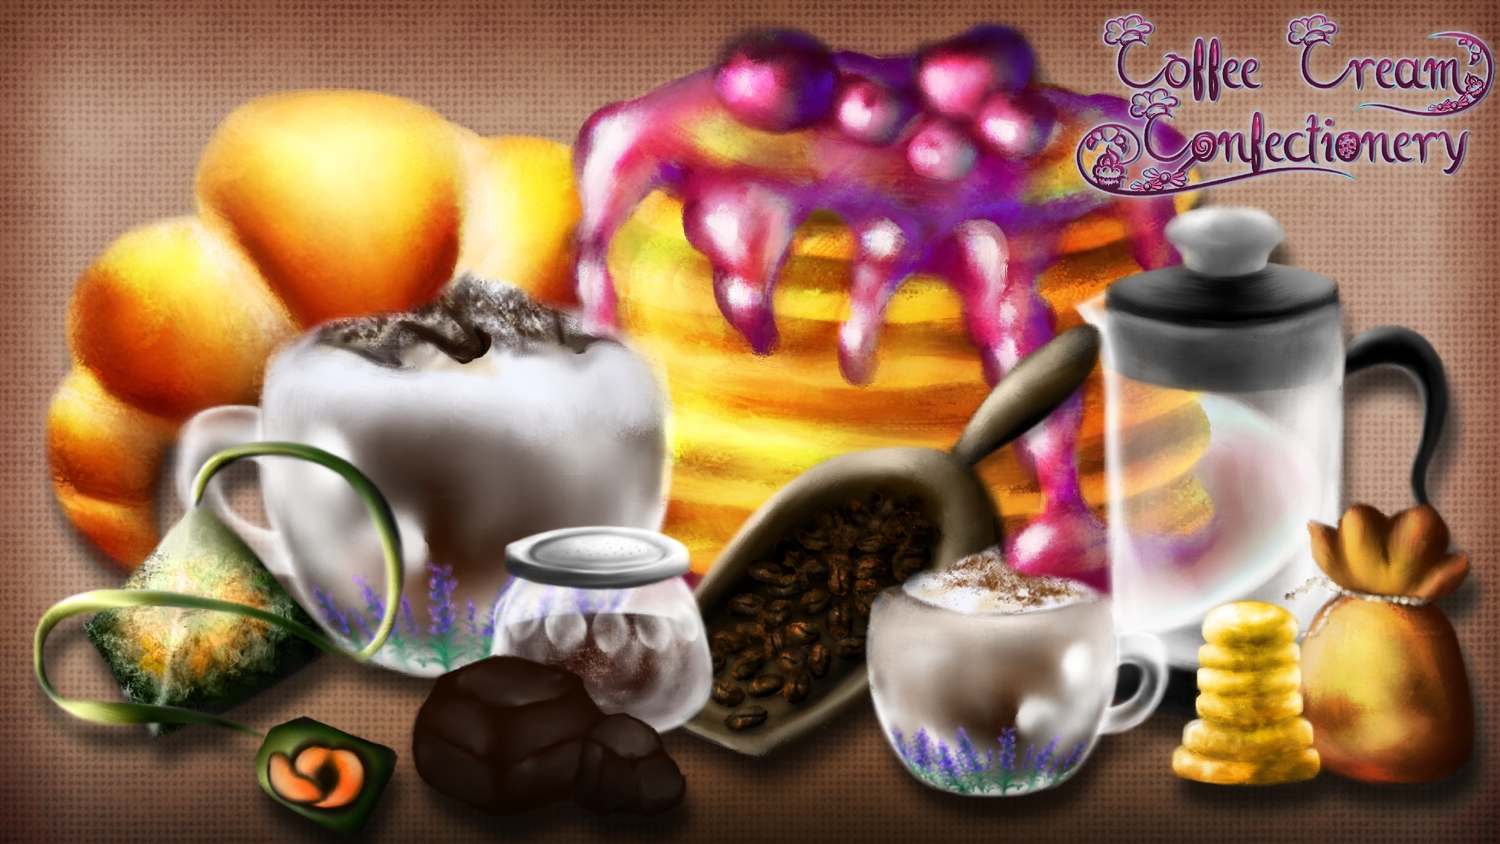 Coffee & Cream Confectionery